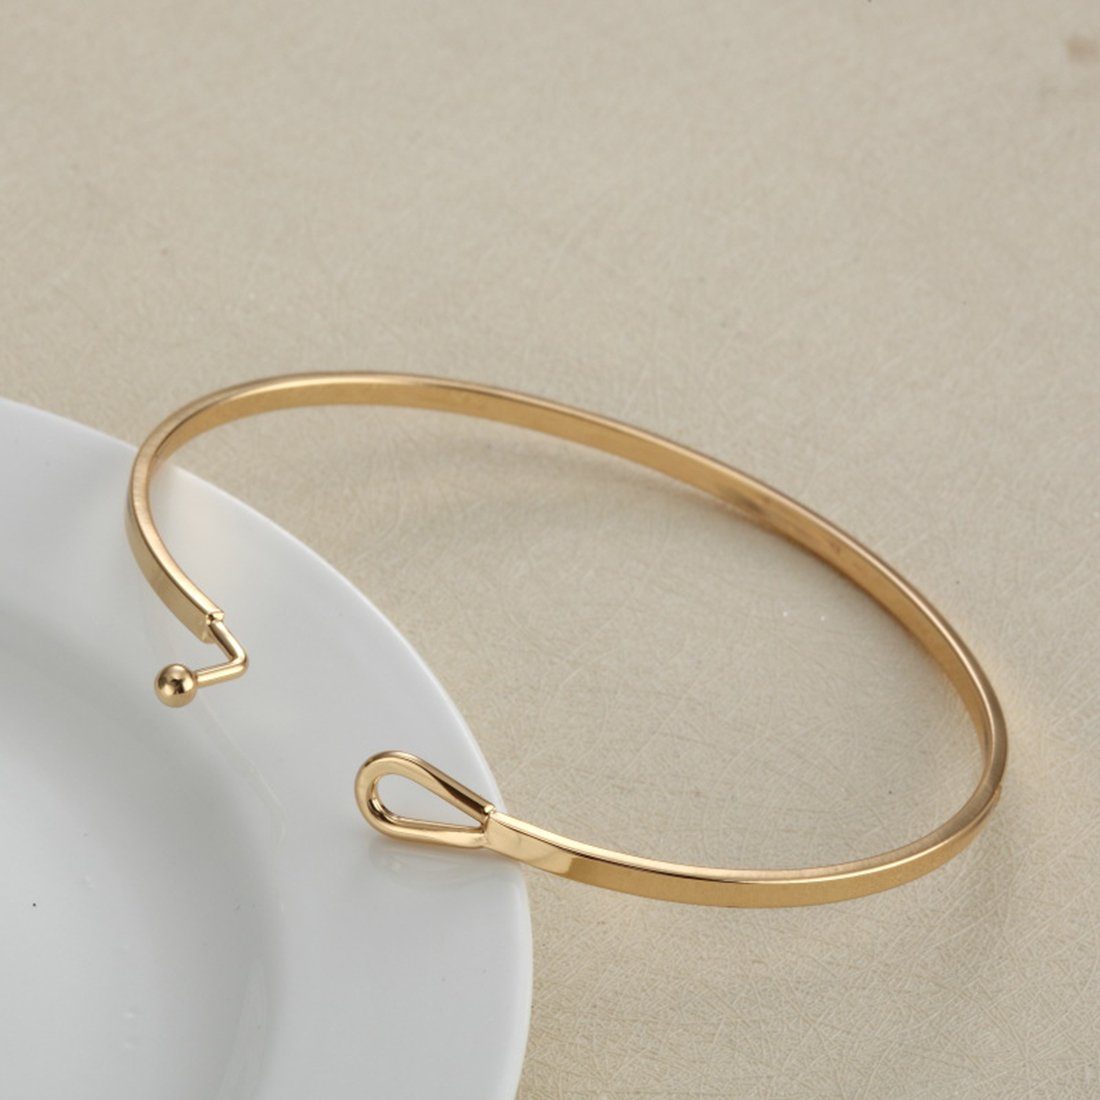 Armkette Gold, Haken Handgefertigten Haiaveng Armband Bar Schmuck,Dainty dünne Armband Manschette Gold minimalistischen Einfache Armreif zarte